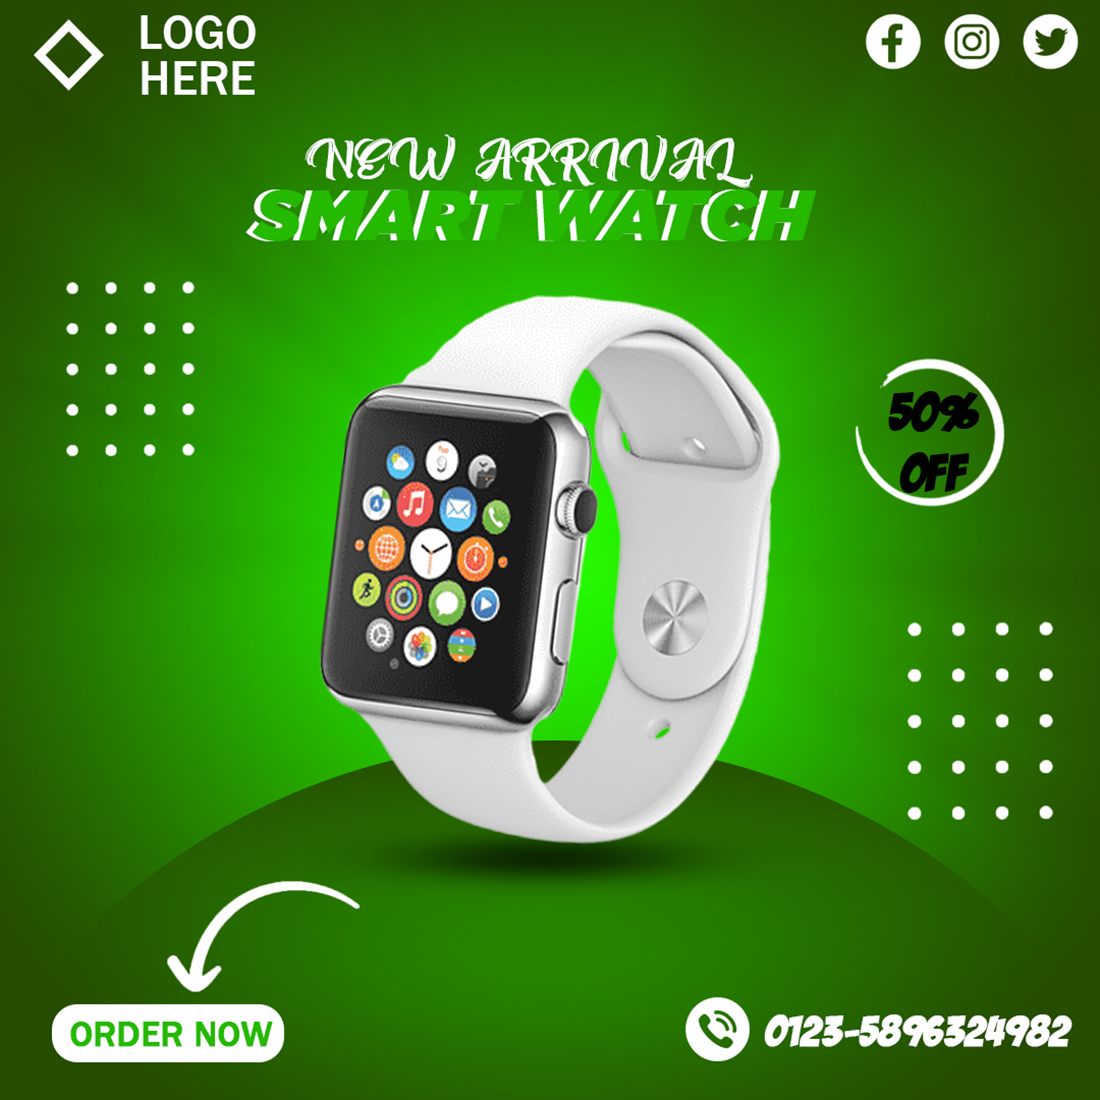 smart watch design 51 8